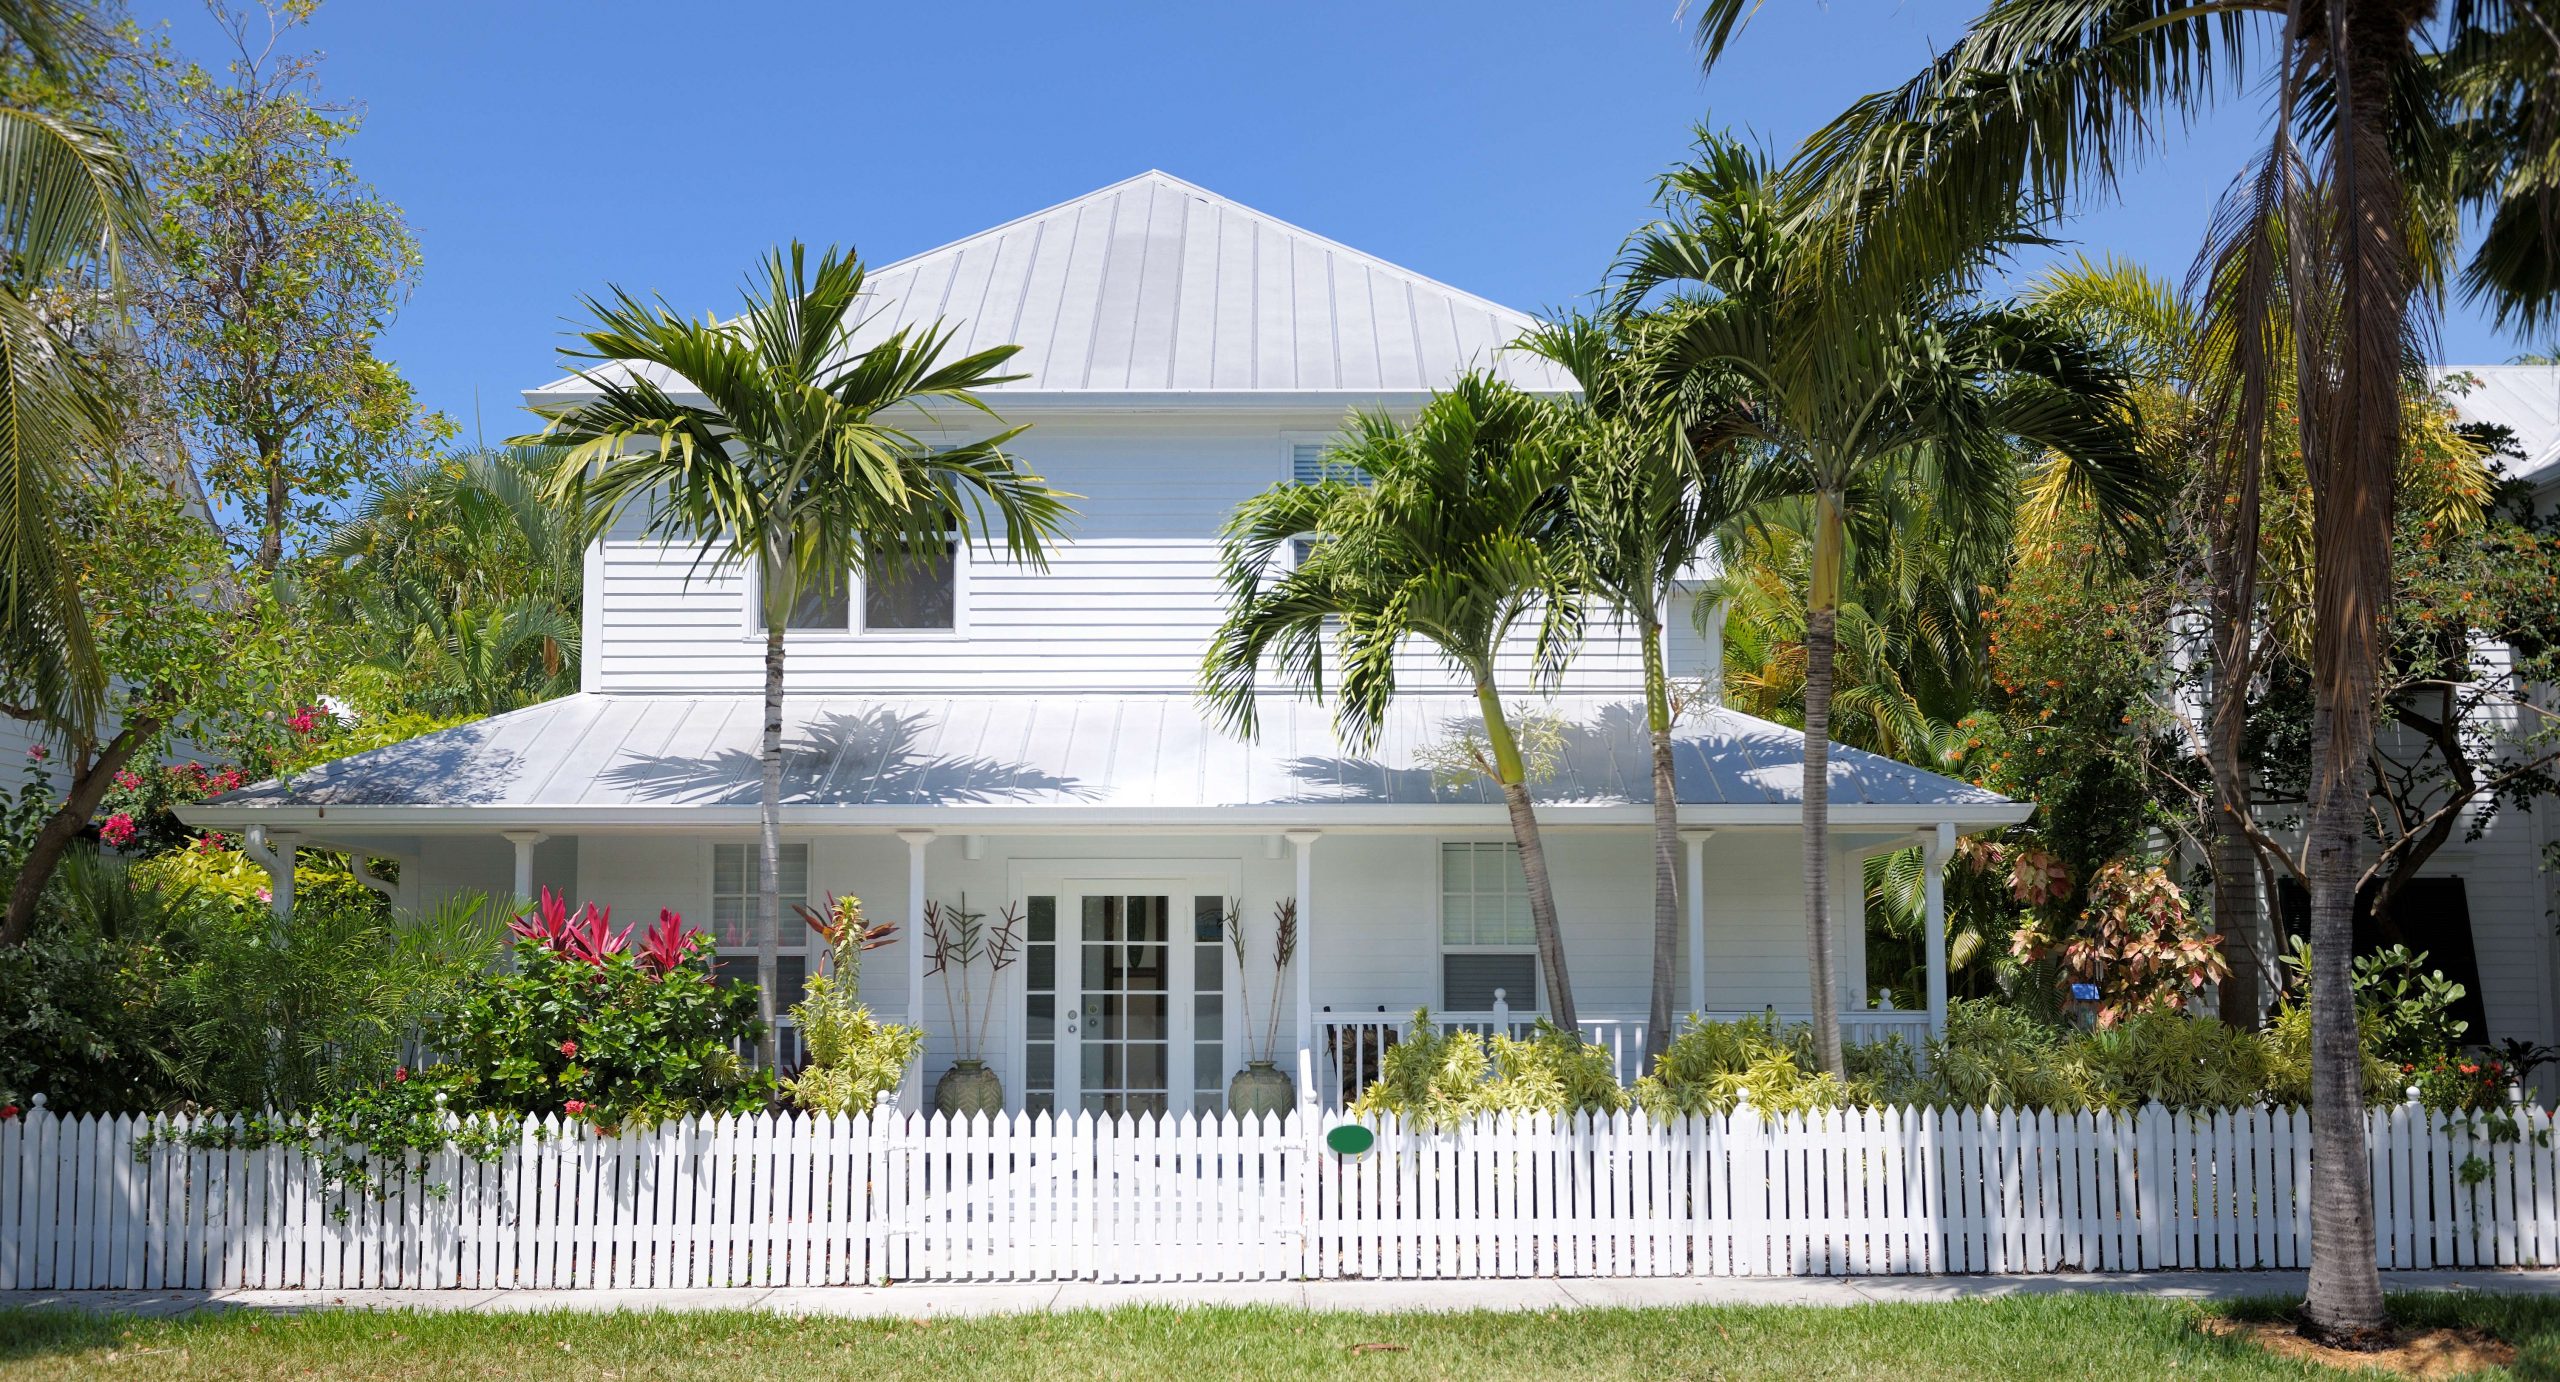 Tropical white home